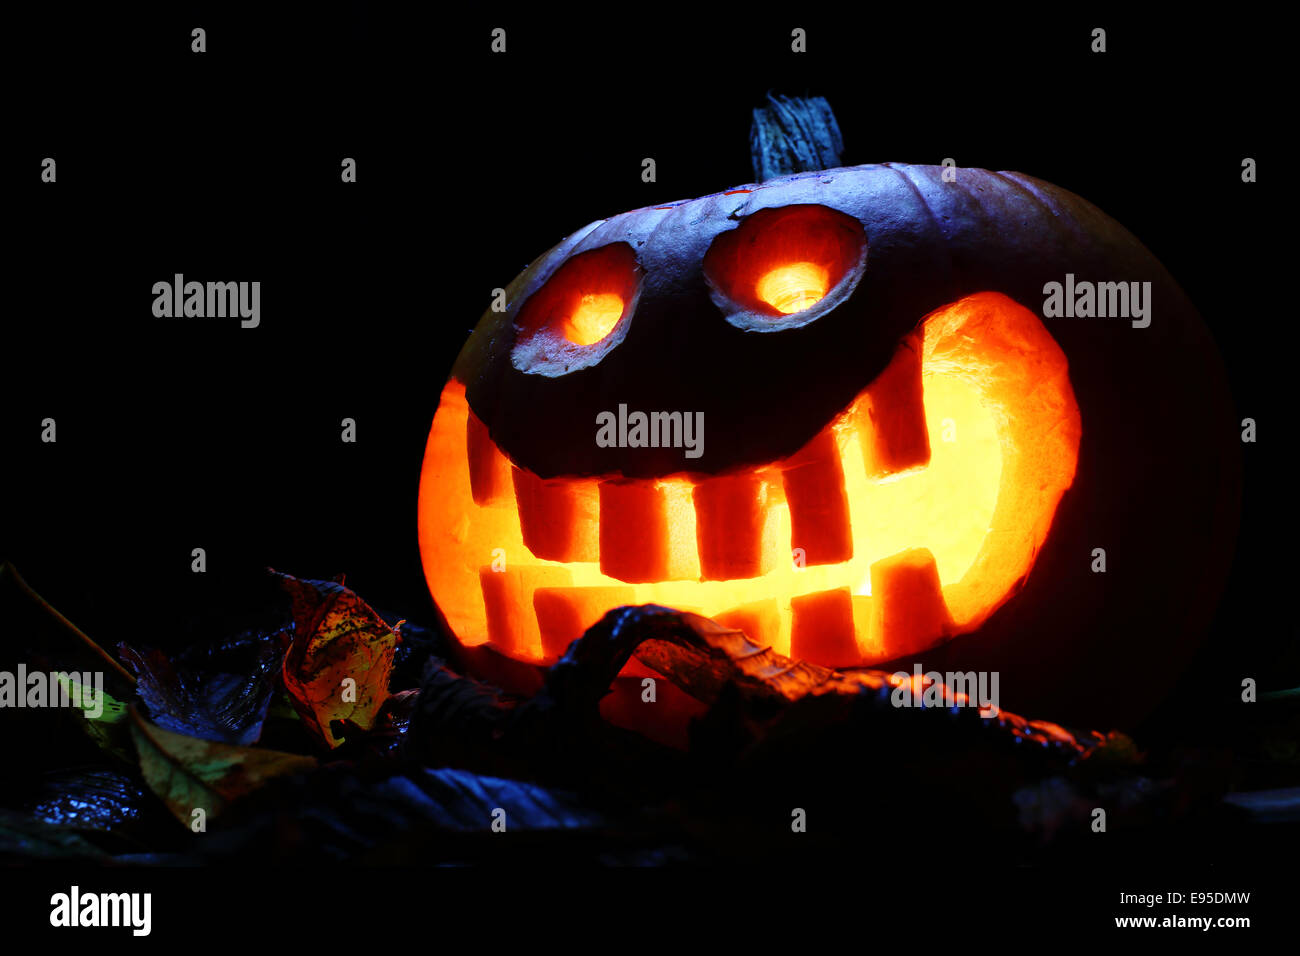 Halloween_pumpkin_lantern_at_night_with_